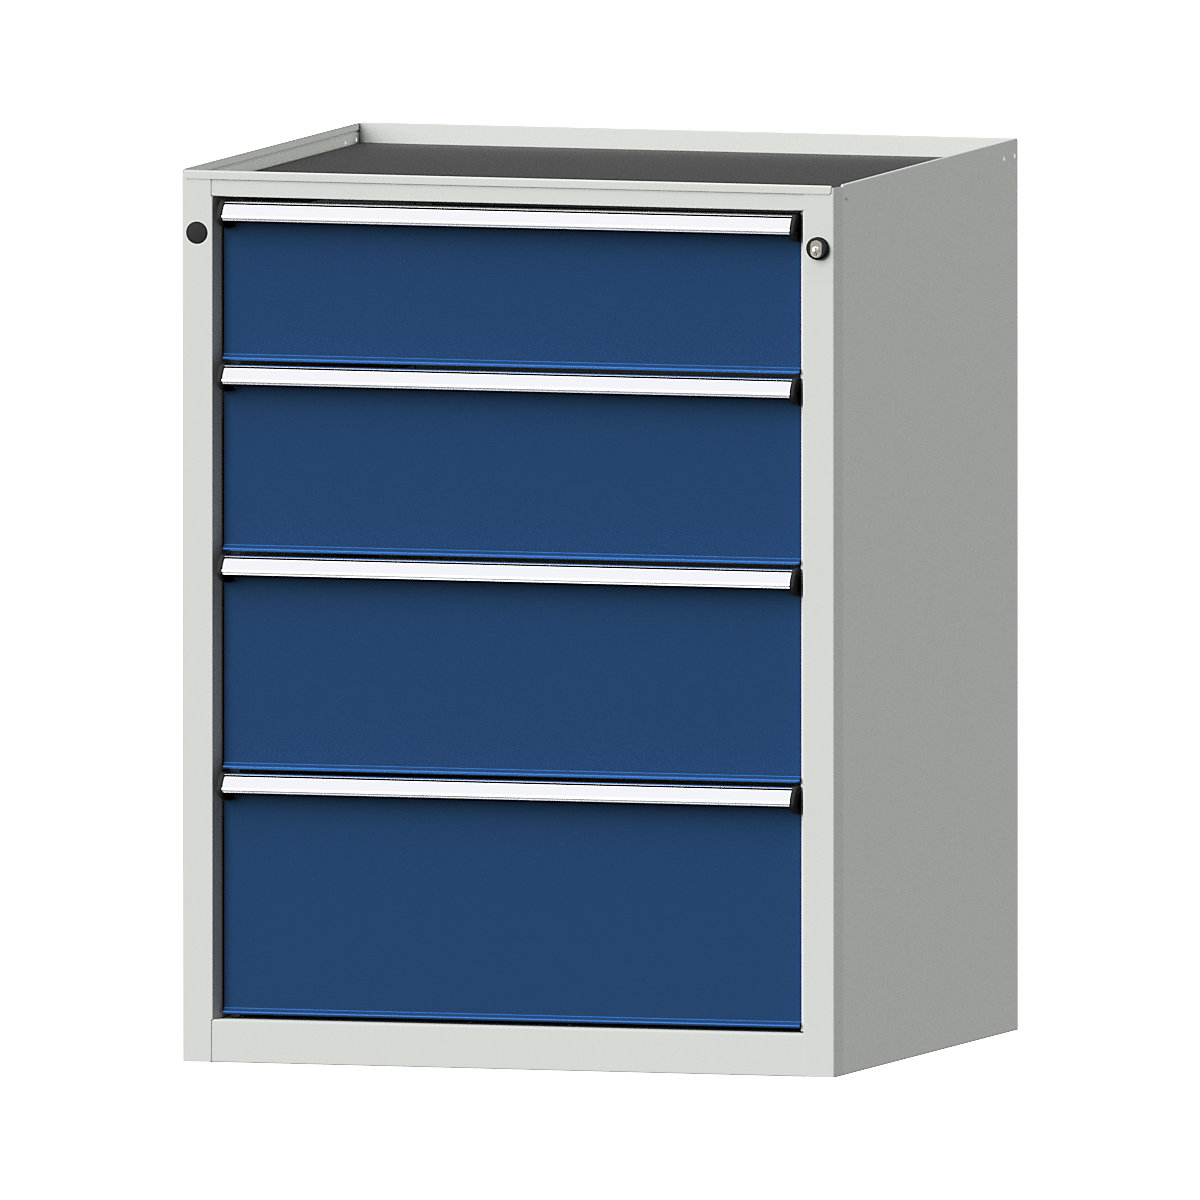 Armoire à tiroirs – ANKE, l x p 760 x 675 mm, 4 tiroirs, hauteur 980 mm, façade bleu gentiane-5